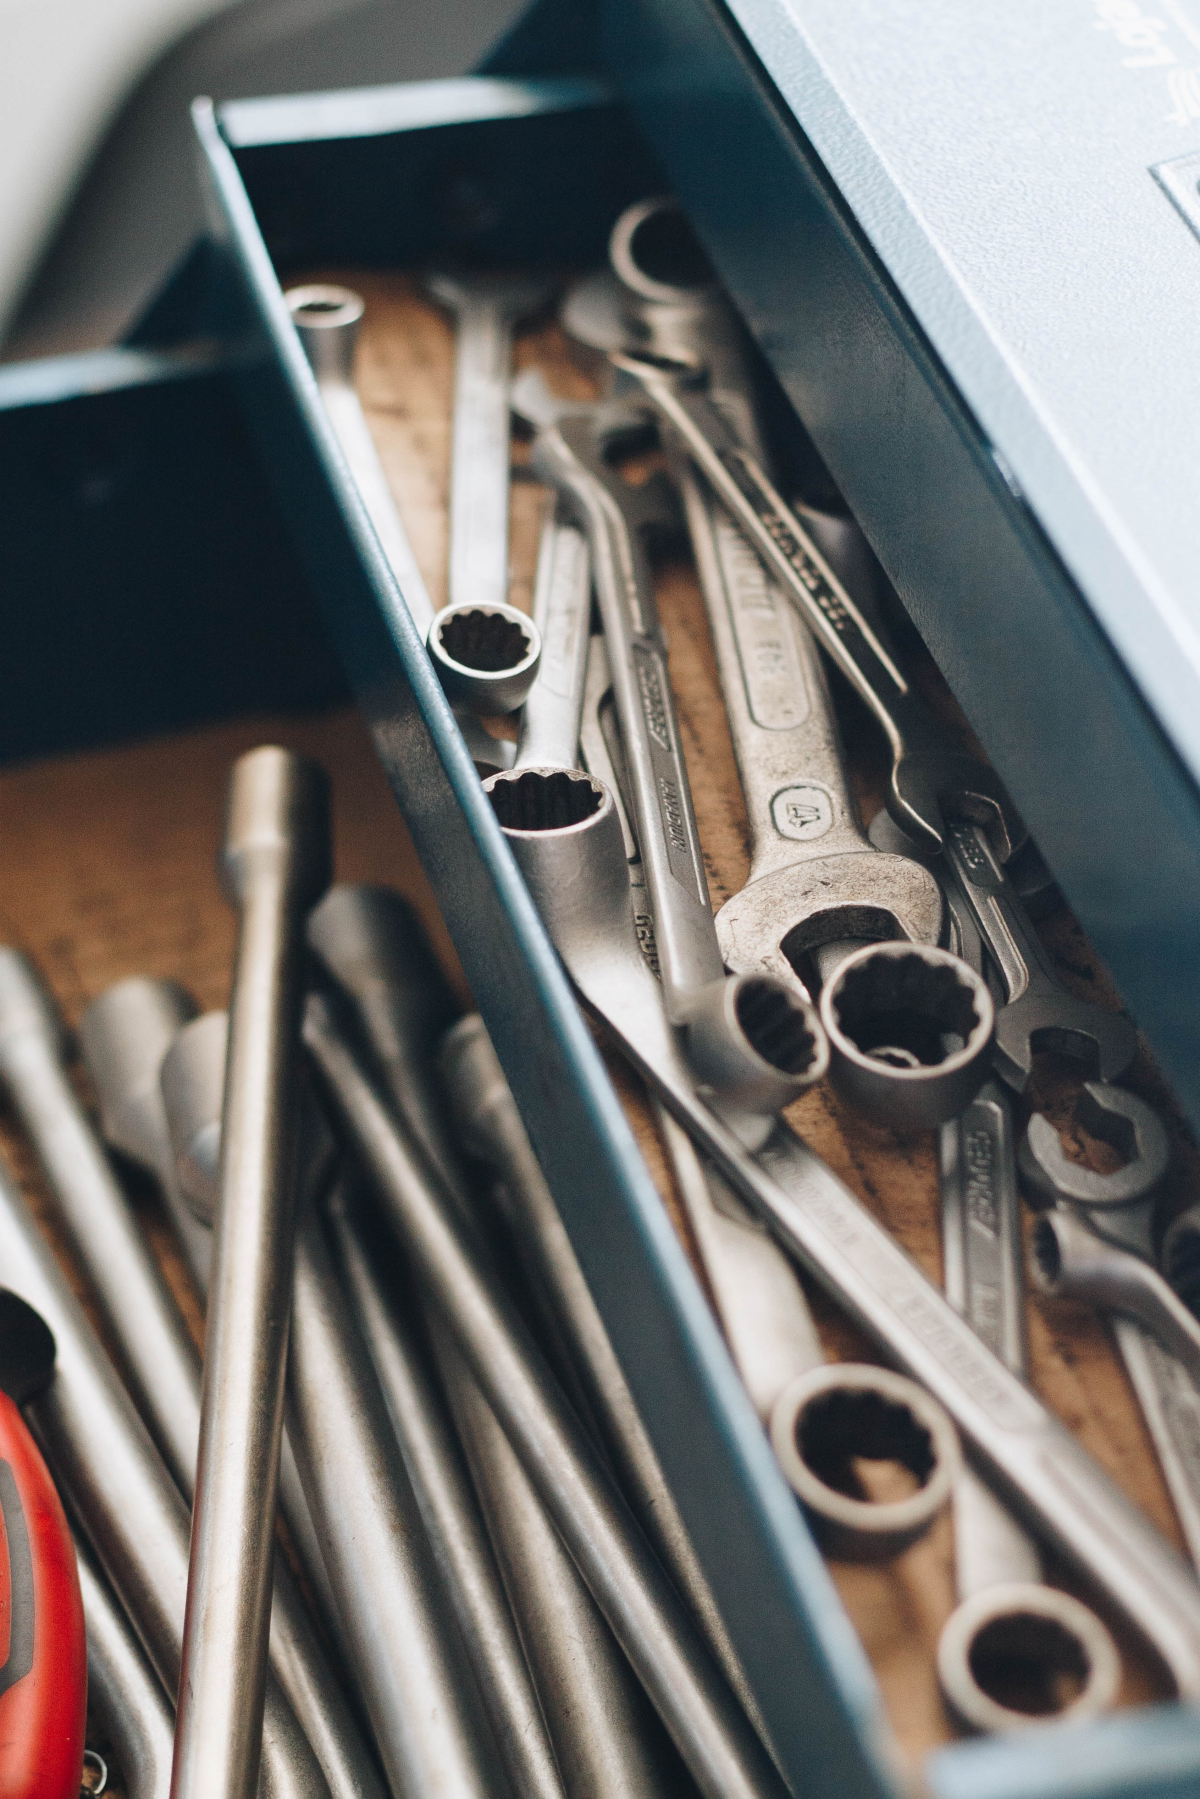 essential diy tools for home maintenance